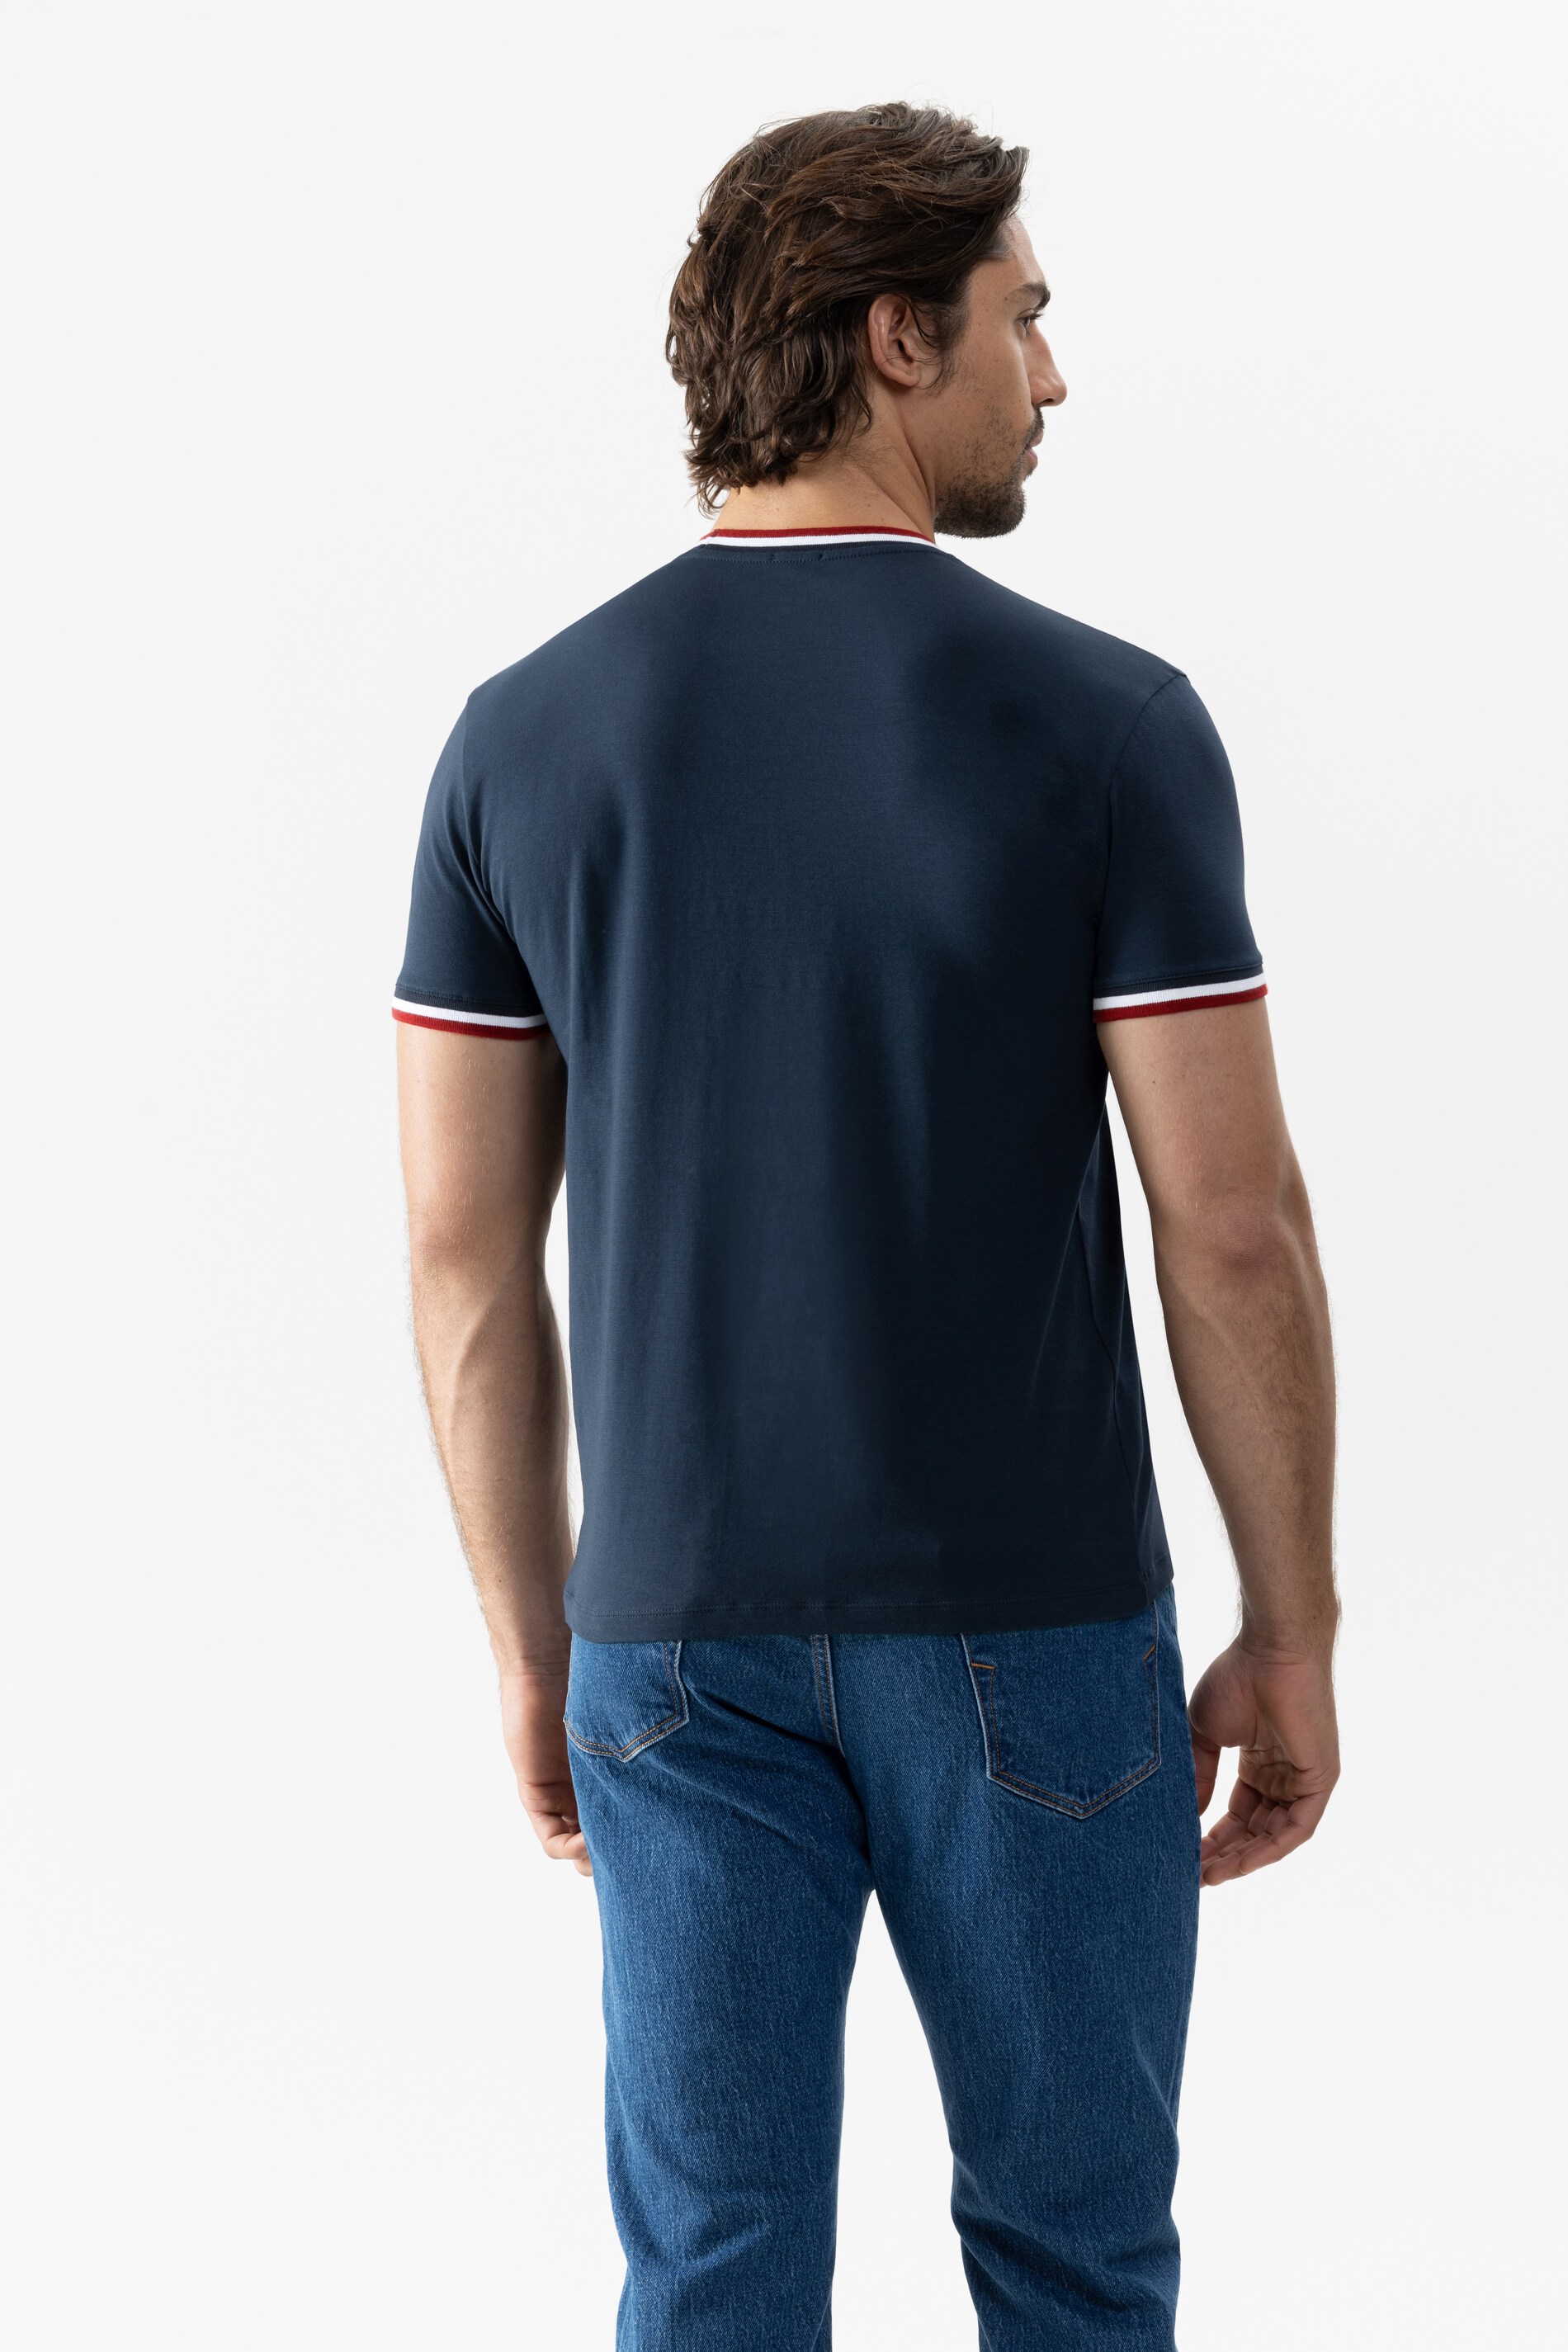 T-shirt Serie Relax Stripes Rear View | mey®